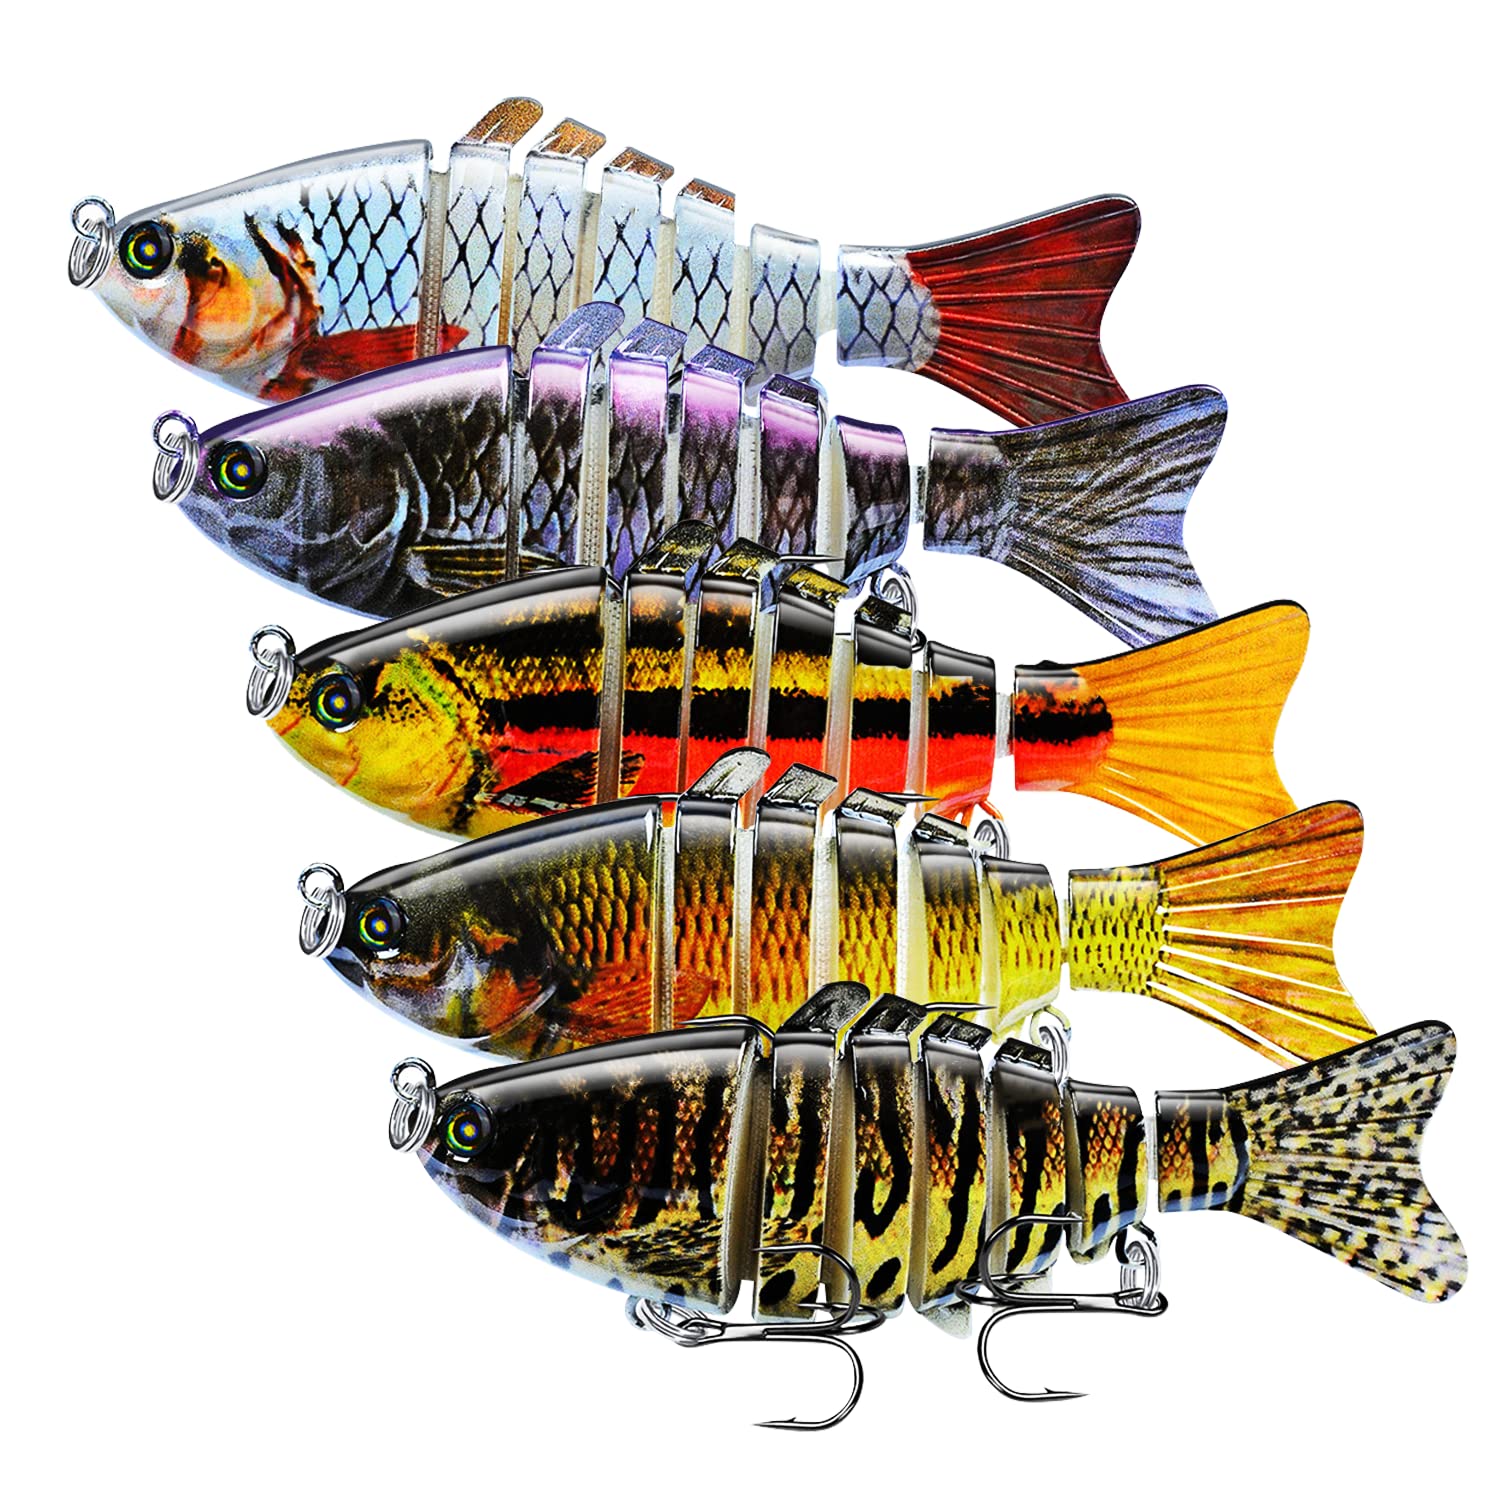 Keenjorika Fishing Lures Multi Jointed Fish Fishing Kits Slow